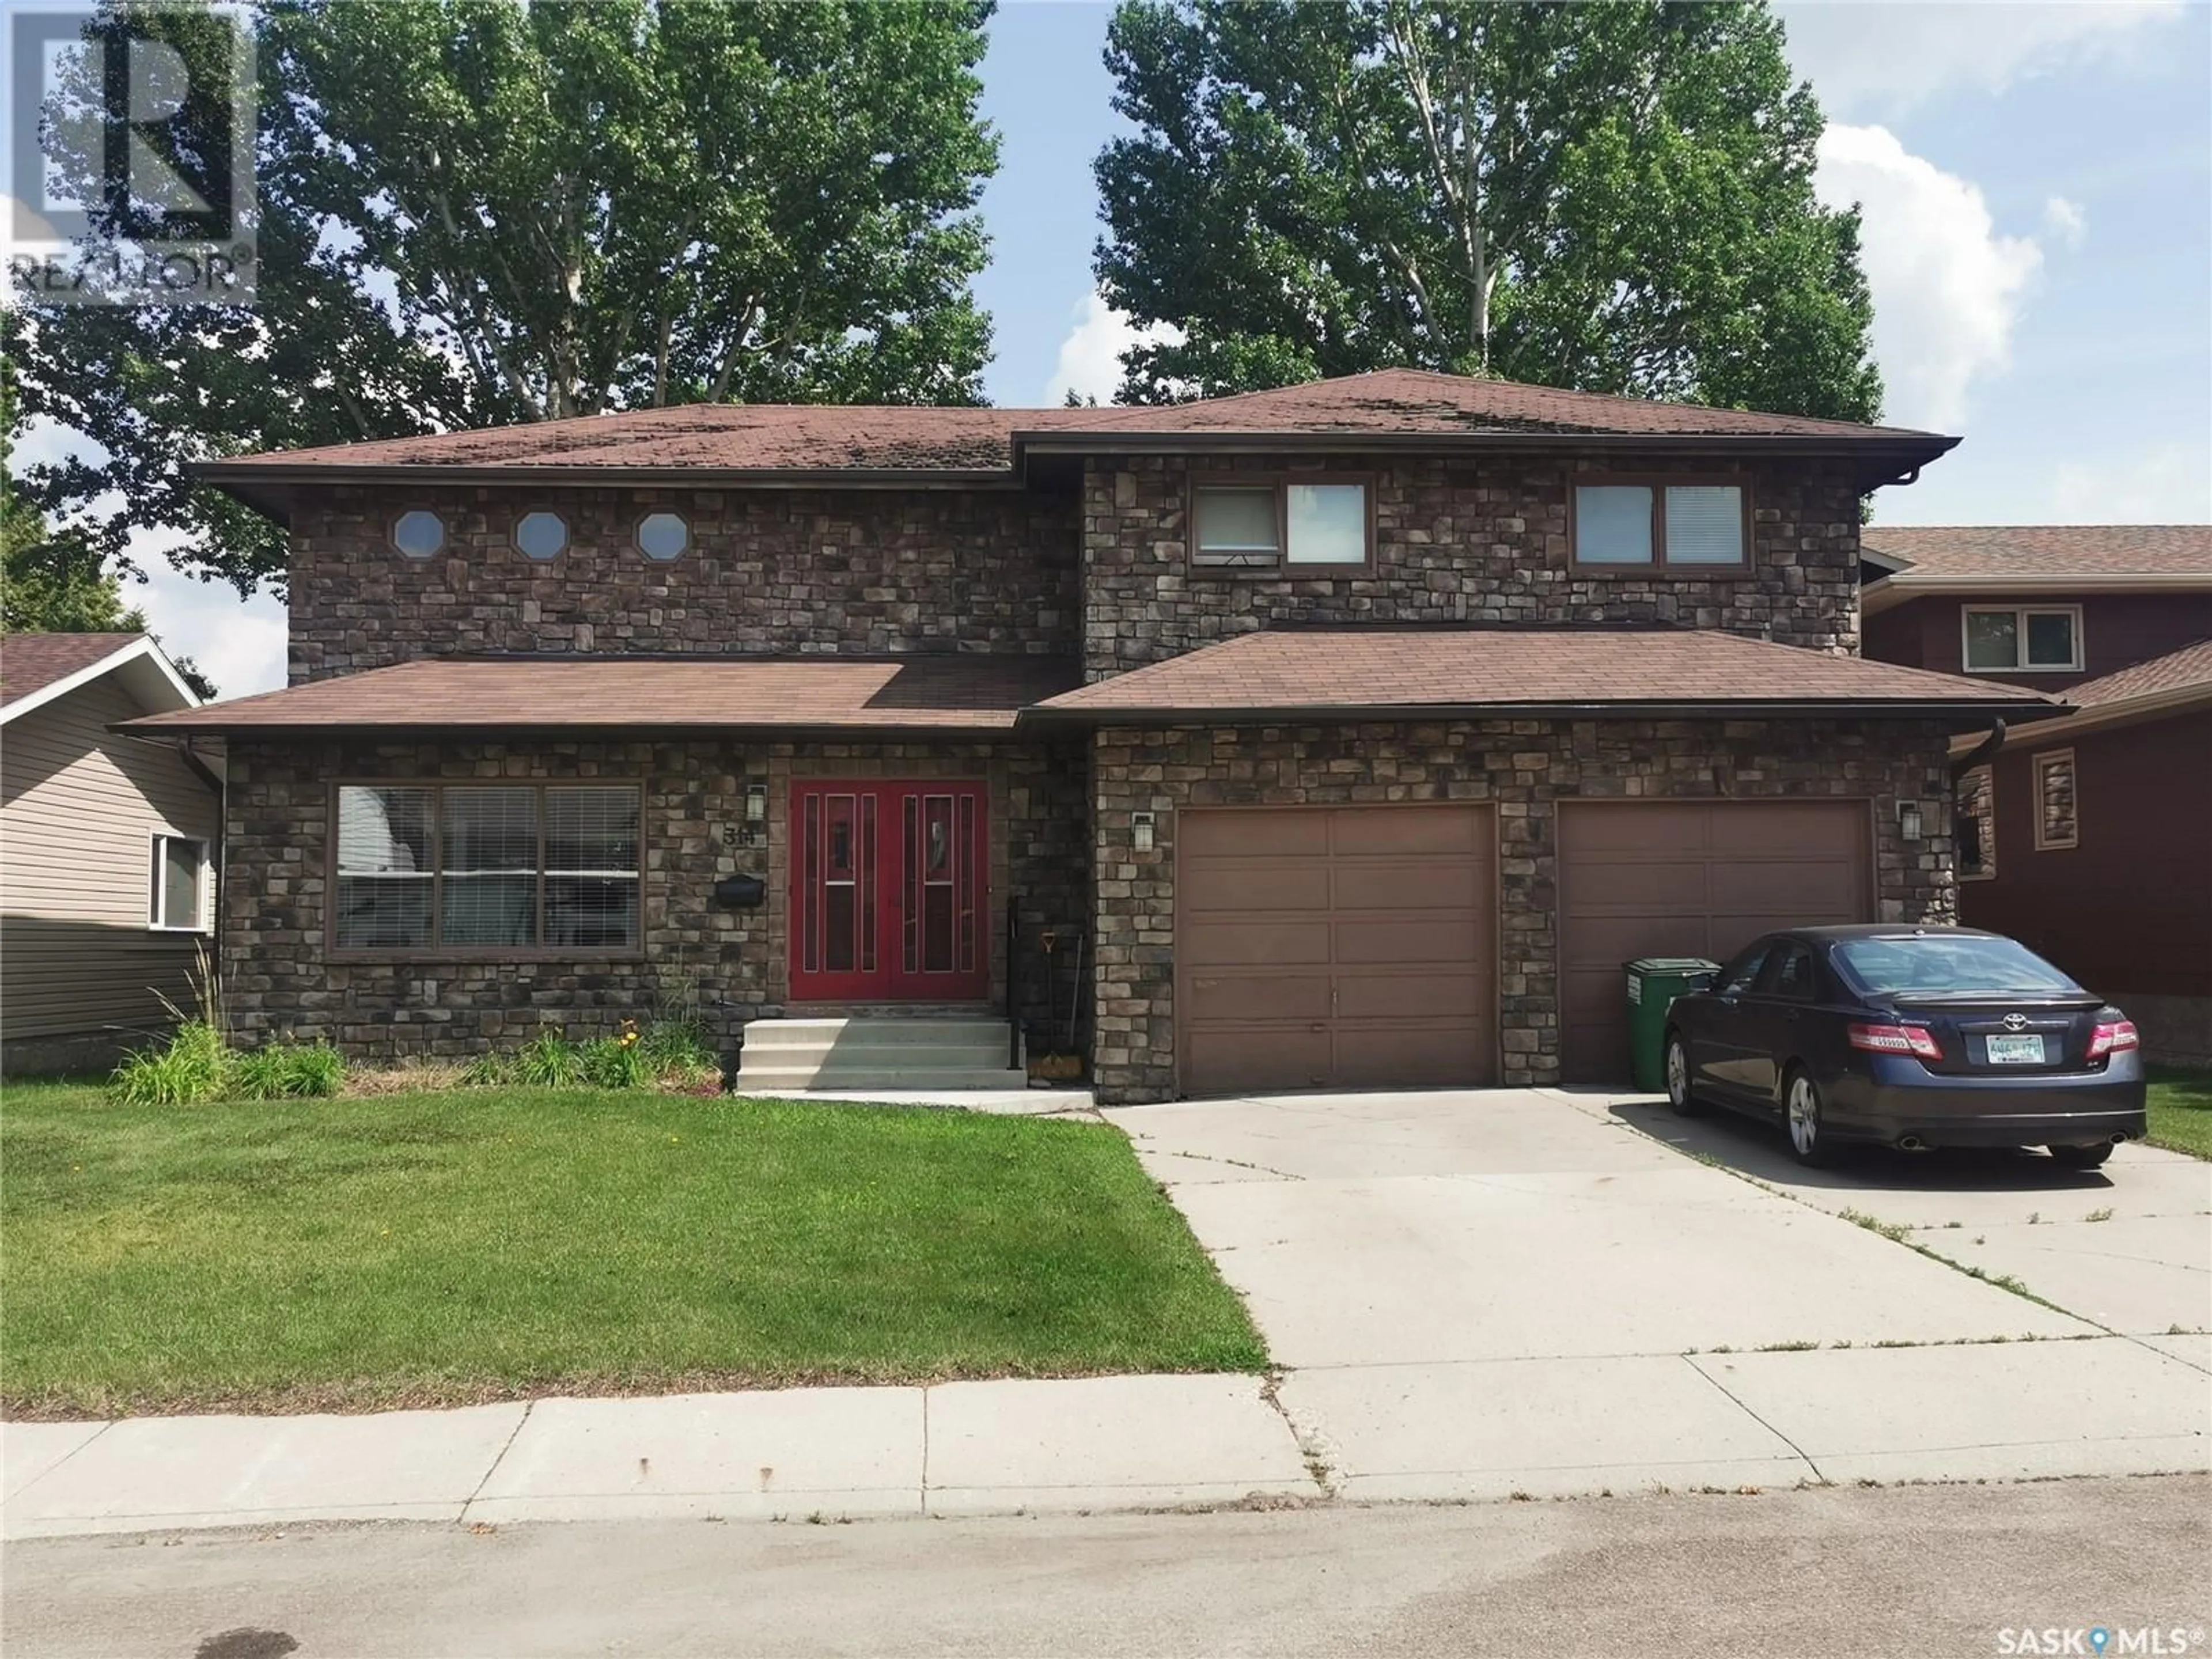 Home with brick exterior material for 314 Dore WAY, Saskatoon Saskatchewan S7K4X9